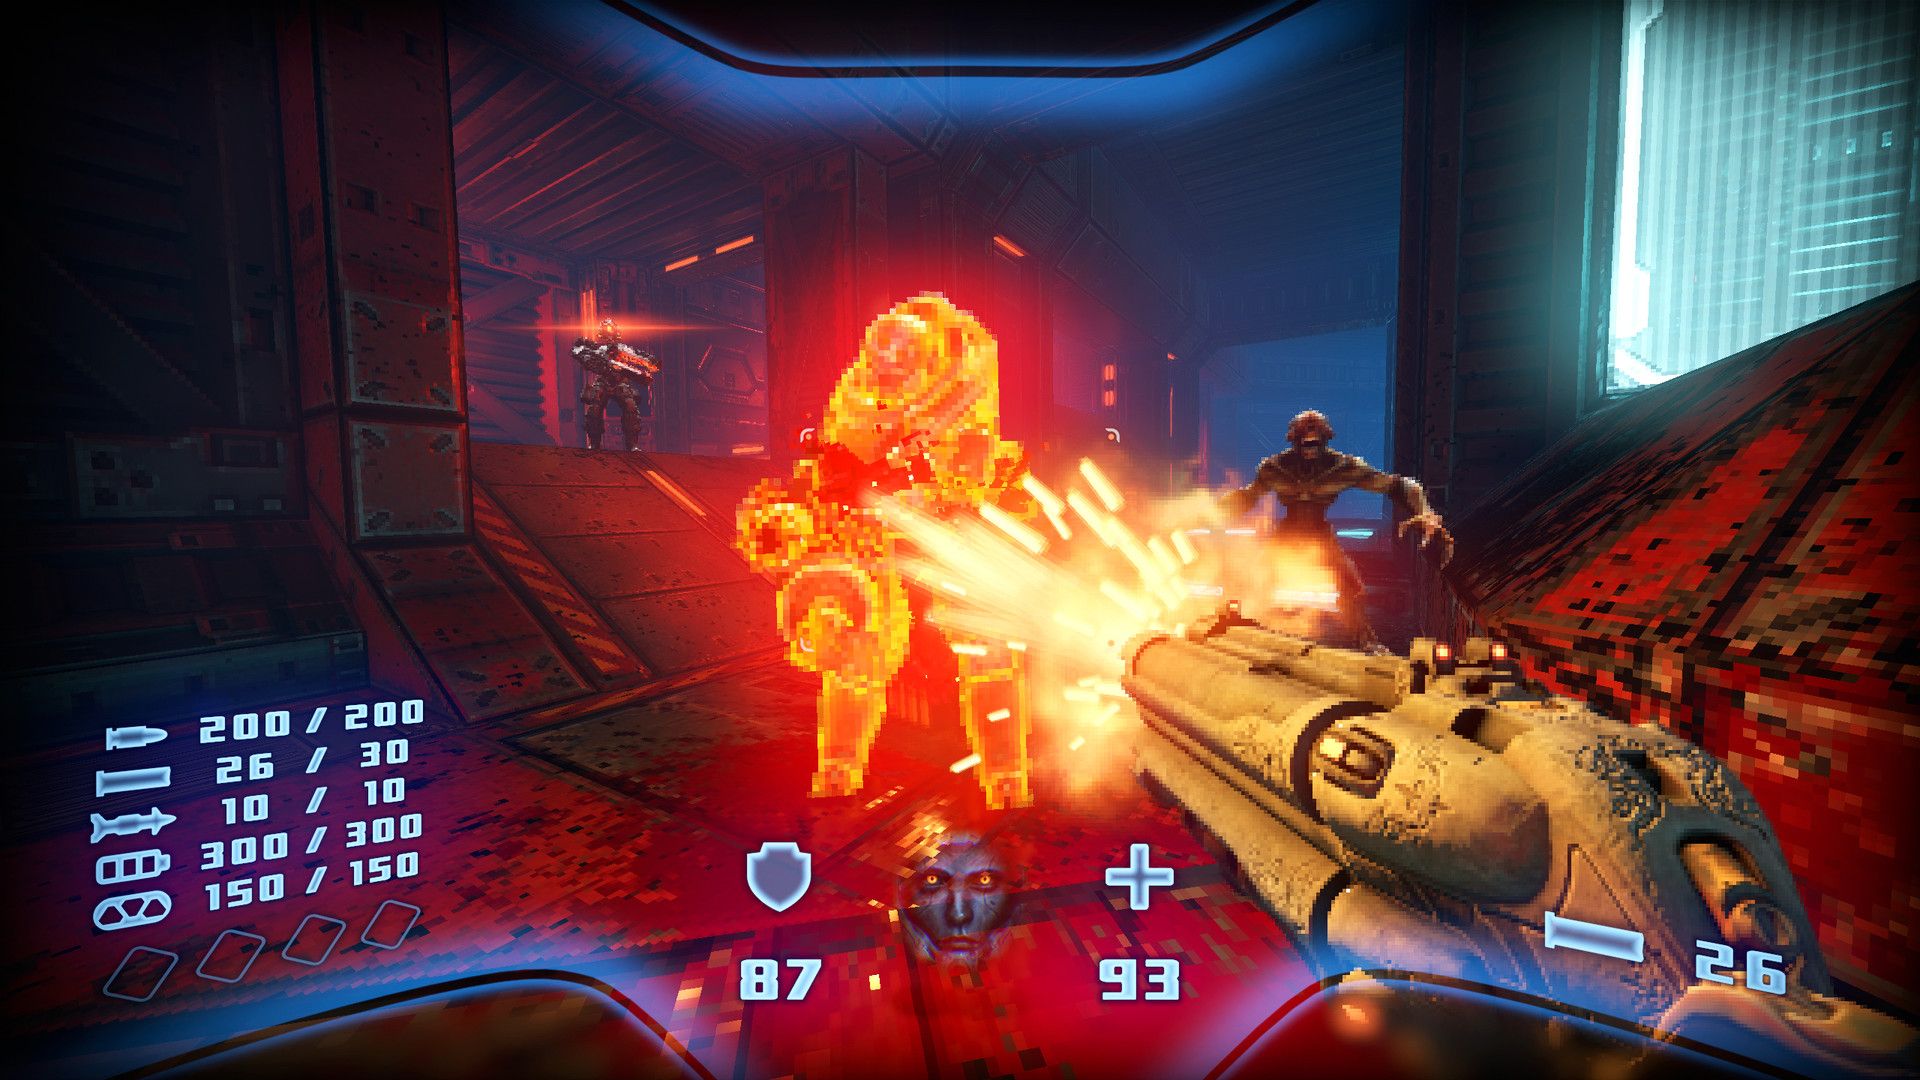 The player firing the Super Shotgun at a heavy enemy